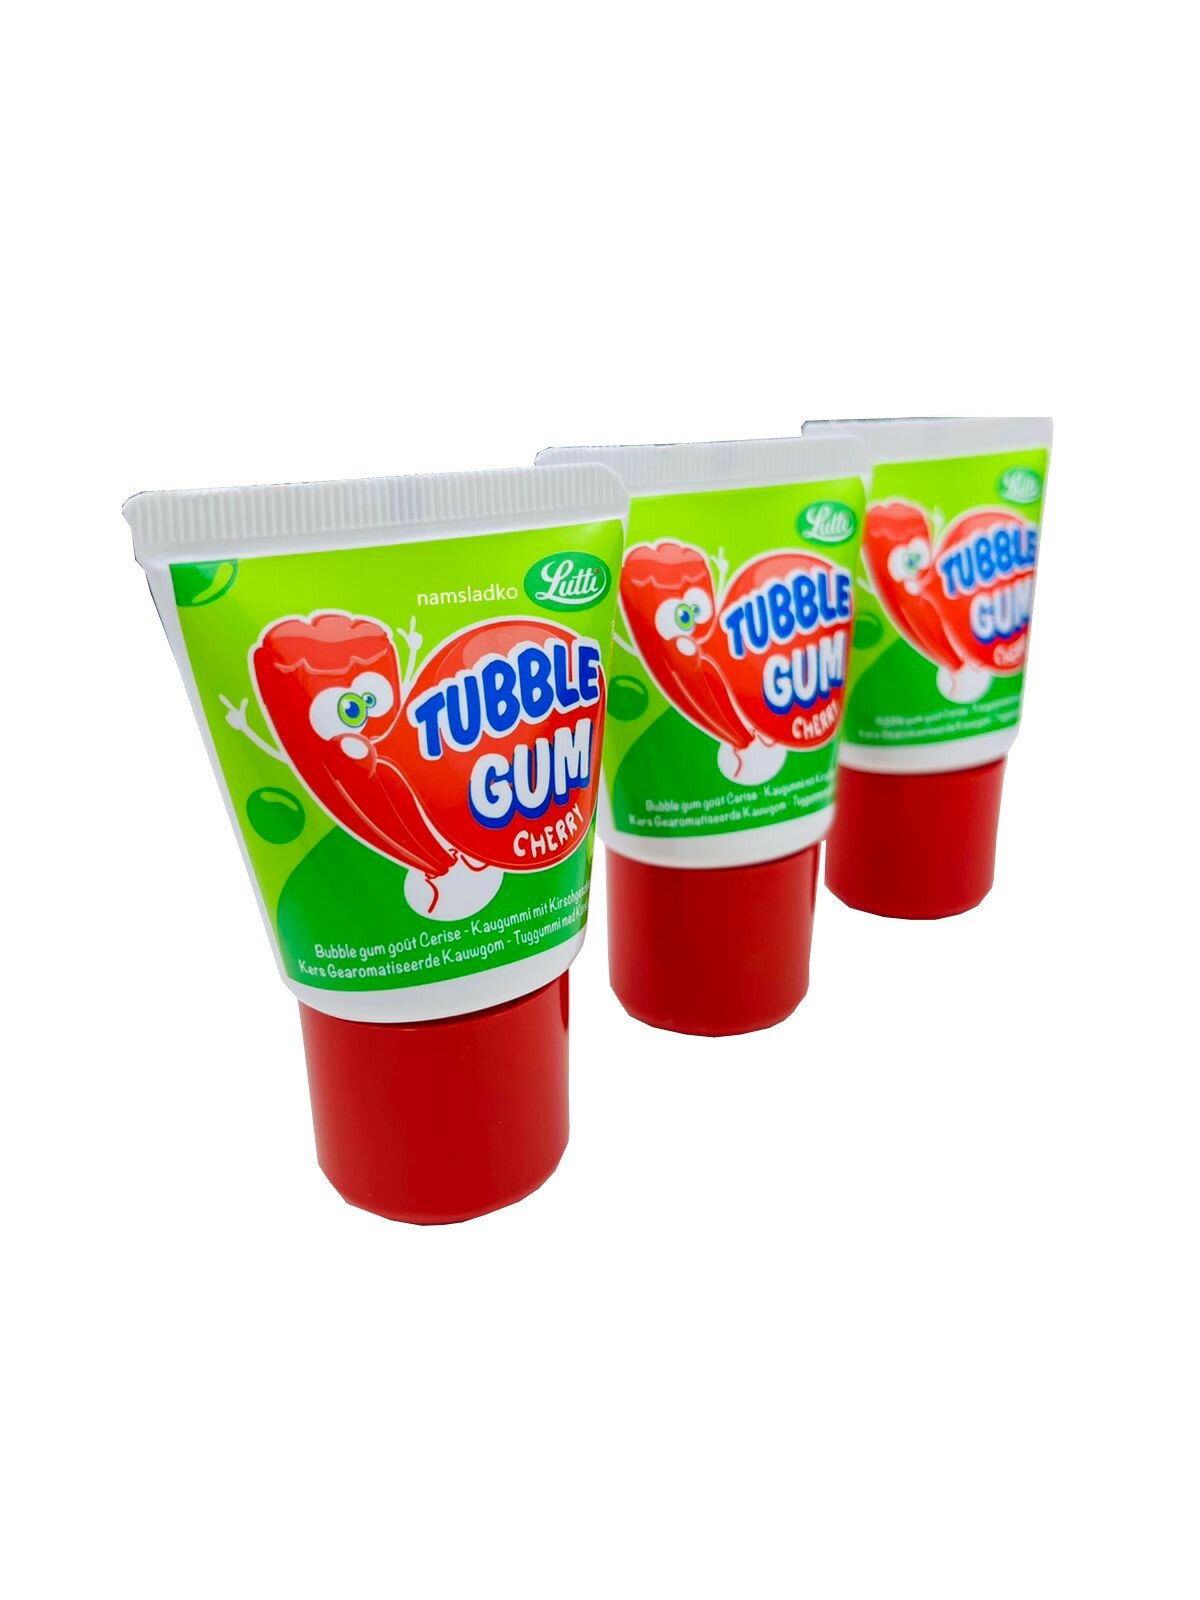 Жевательная резинка Tubble Gum Cherry (Вишня) 3 шт * 35 гр, Франция.